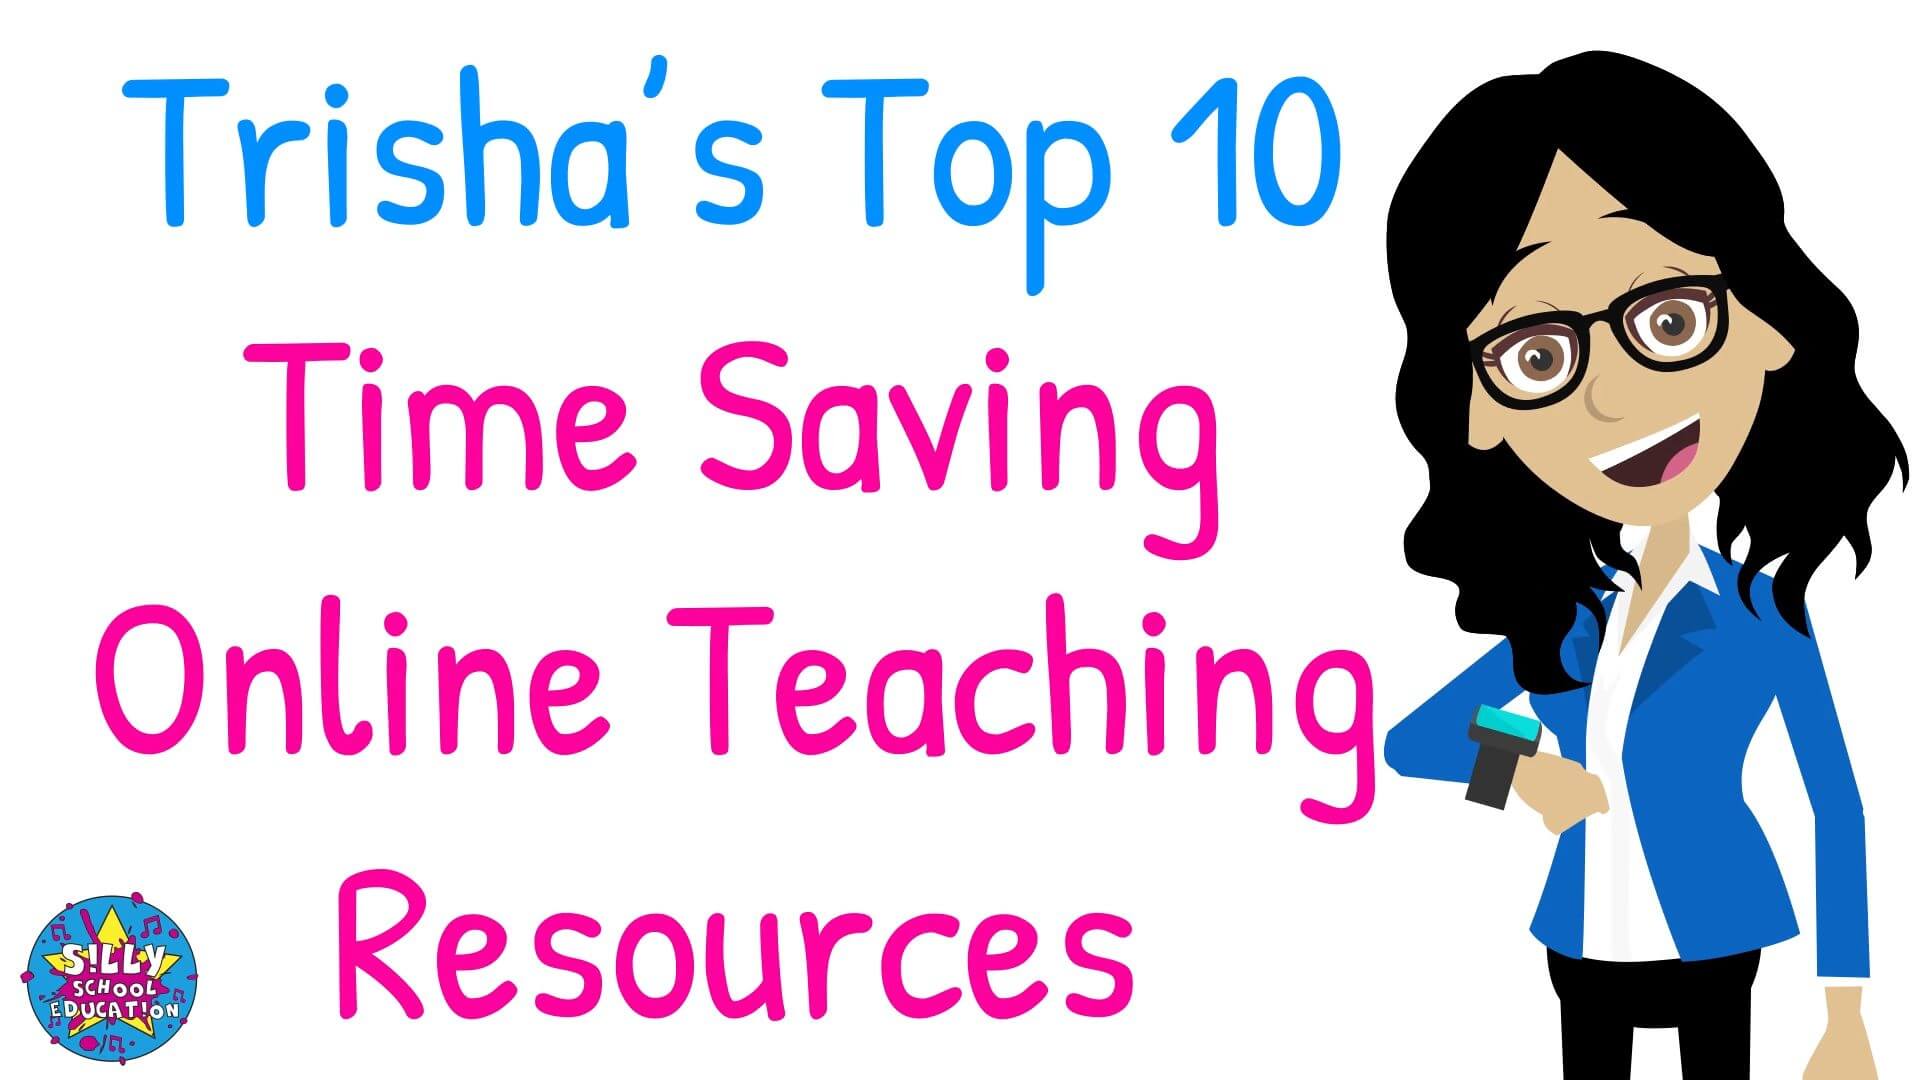 Online Teaching Resources for Teachers Top Ten